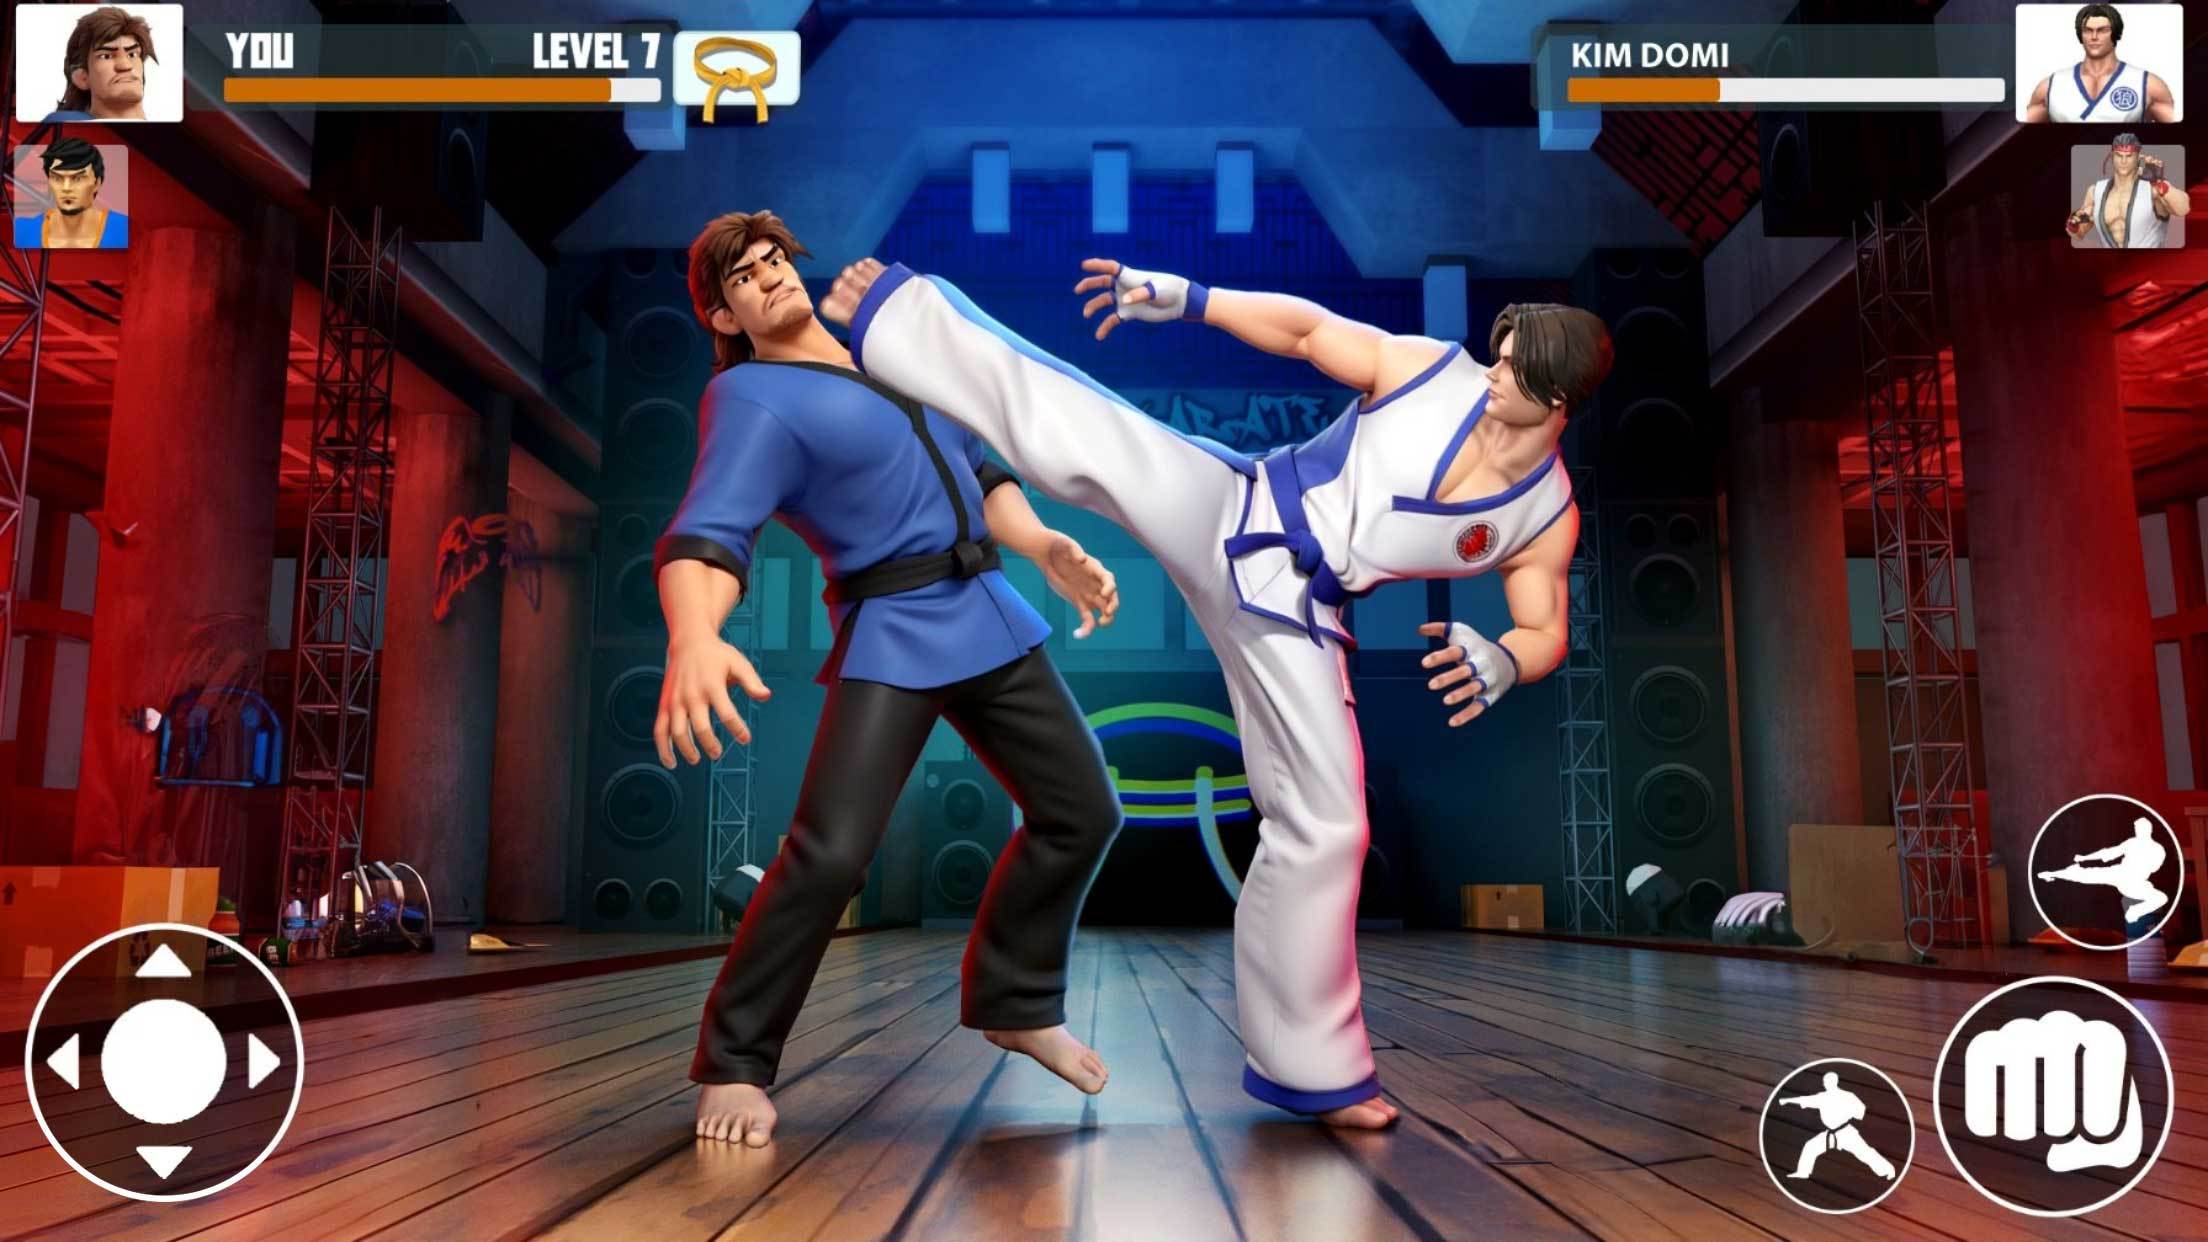 Screenshot 1 of Karate Fighter: Fighting Games 3.4.0